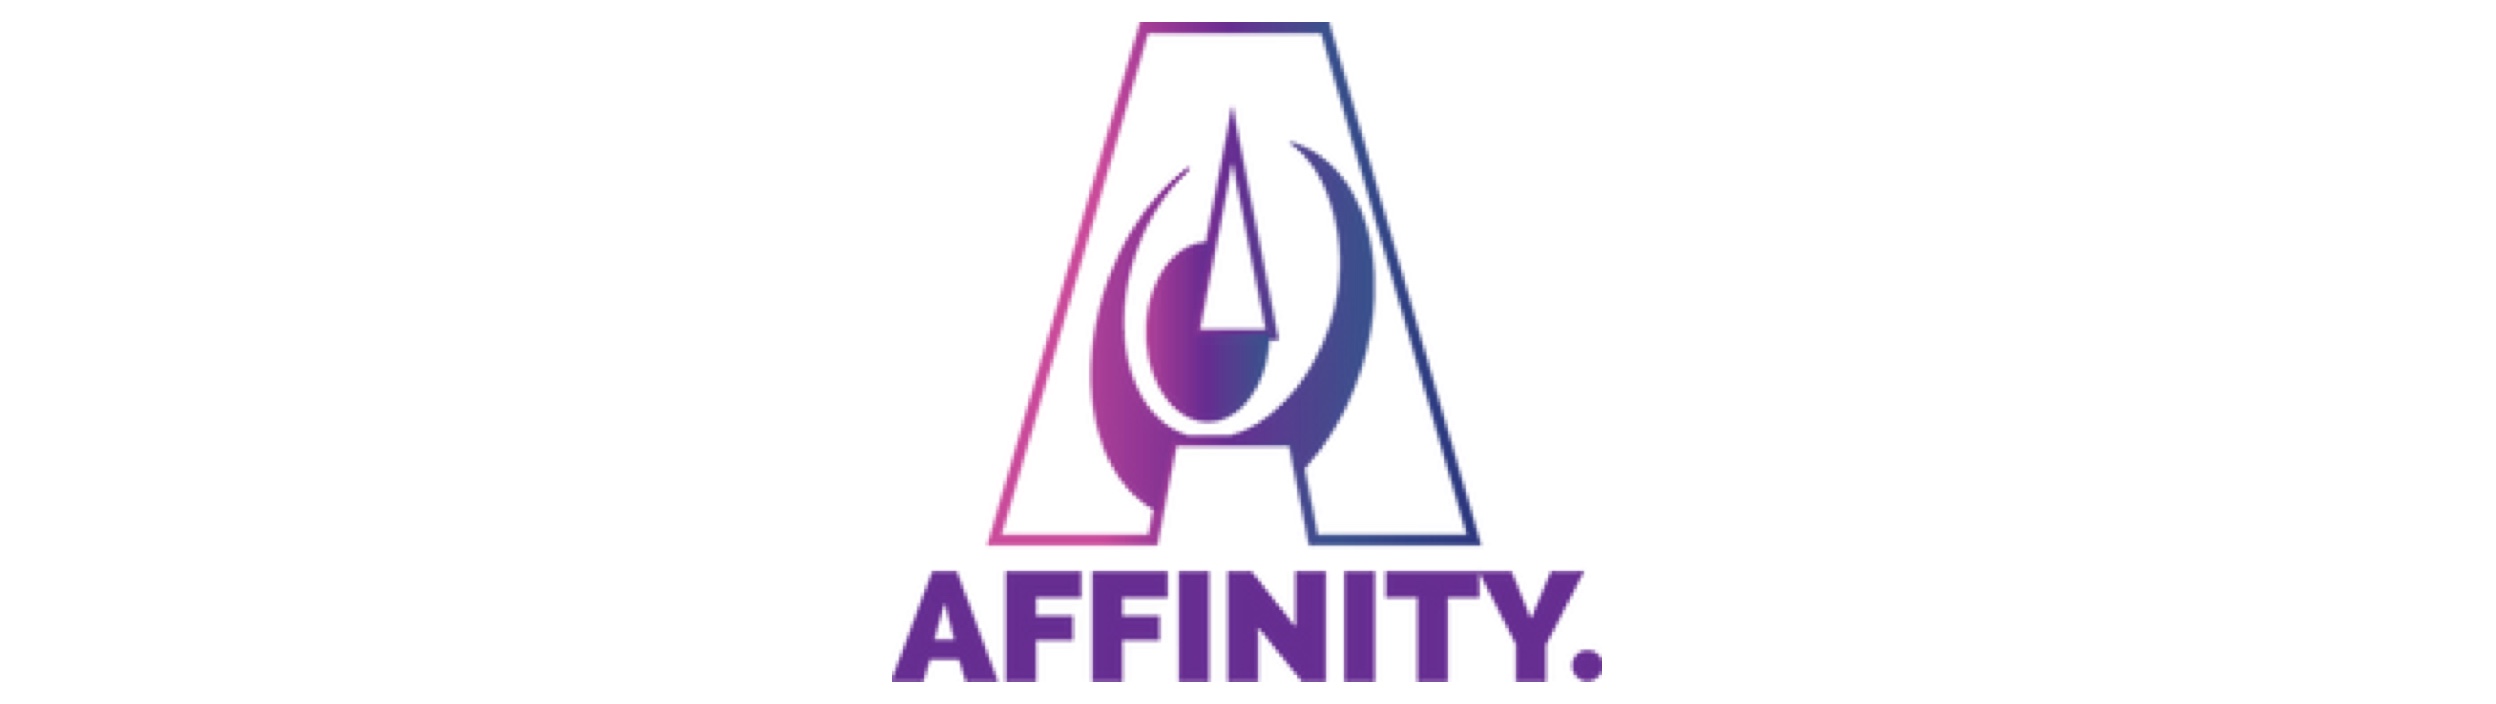 Affinity Community Servies